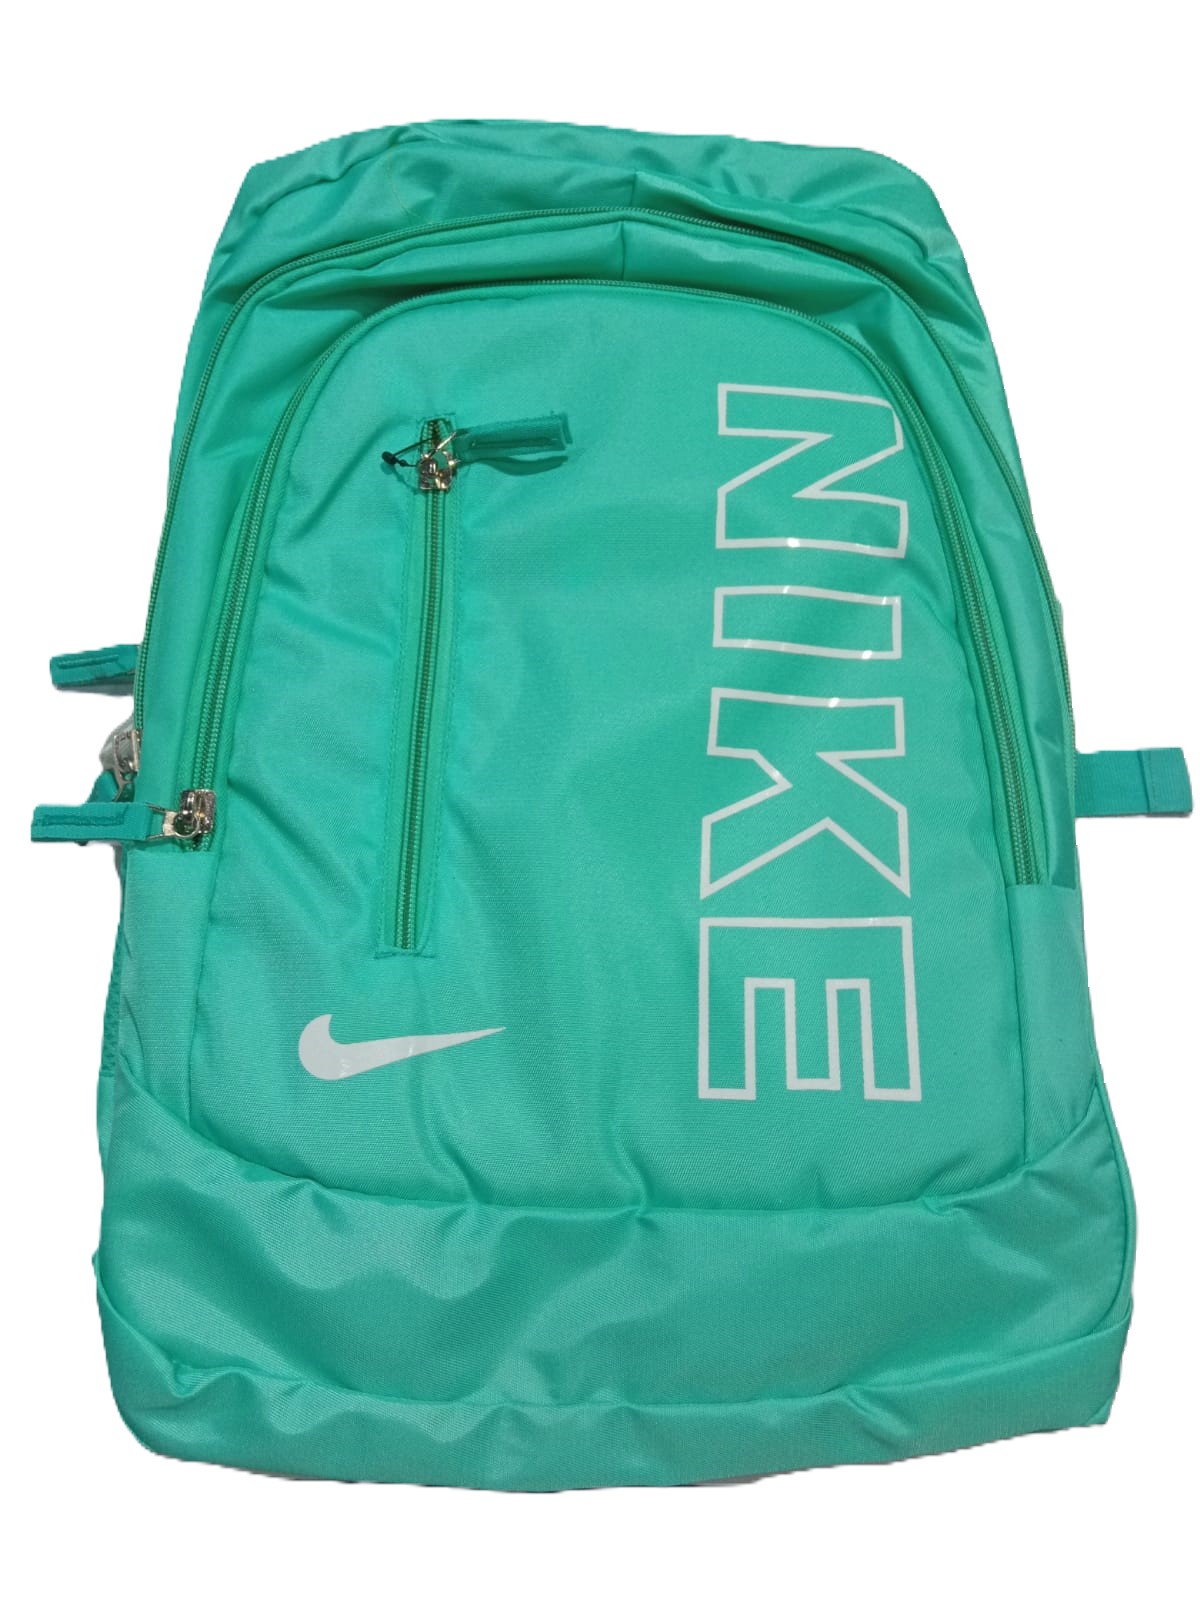 Nike School Bag (Green)